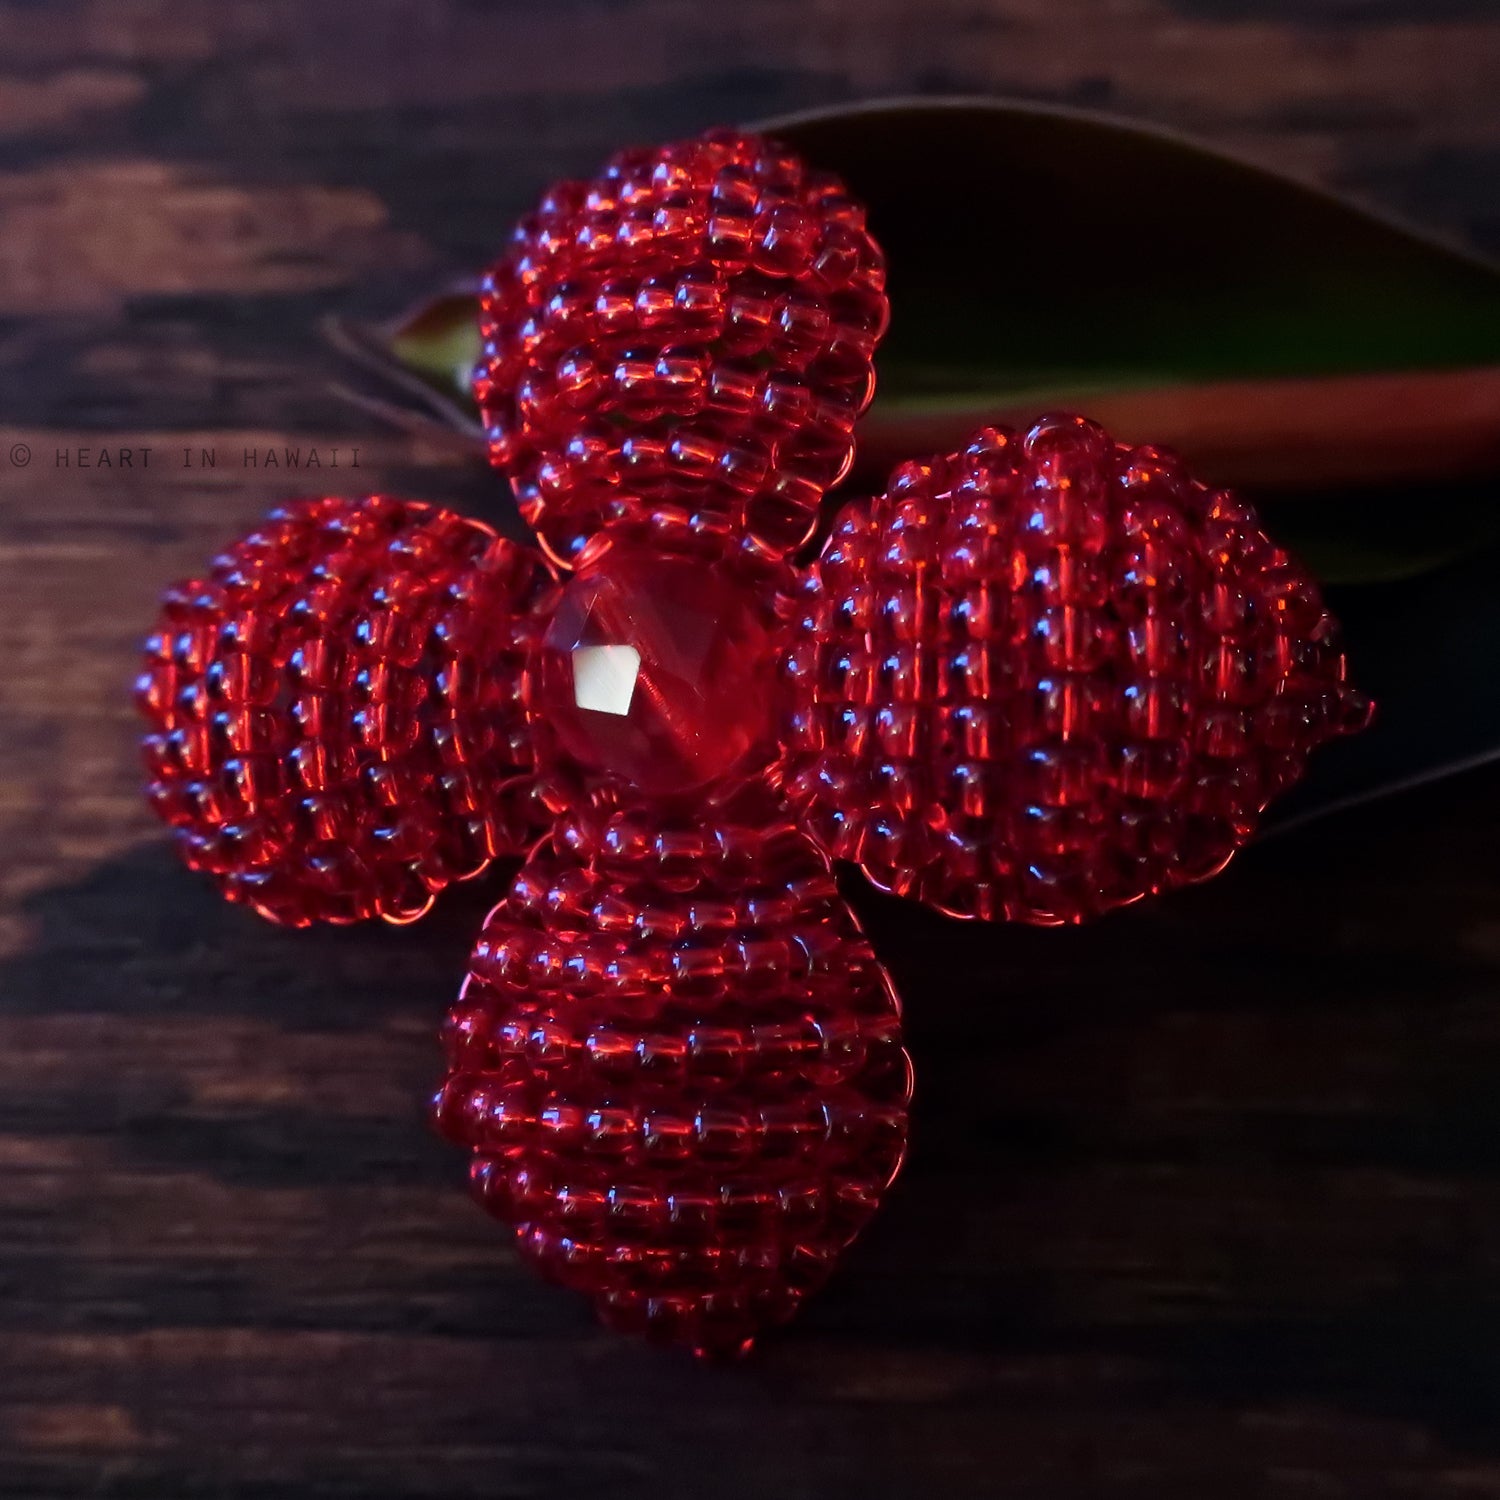 Heart in Hawaii Makalapua Quatrefoil Beaded Flower Pin - Red